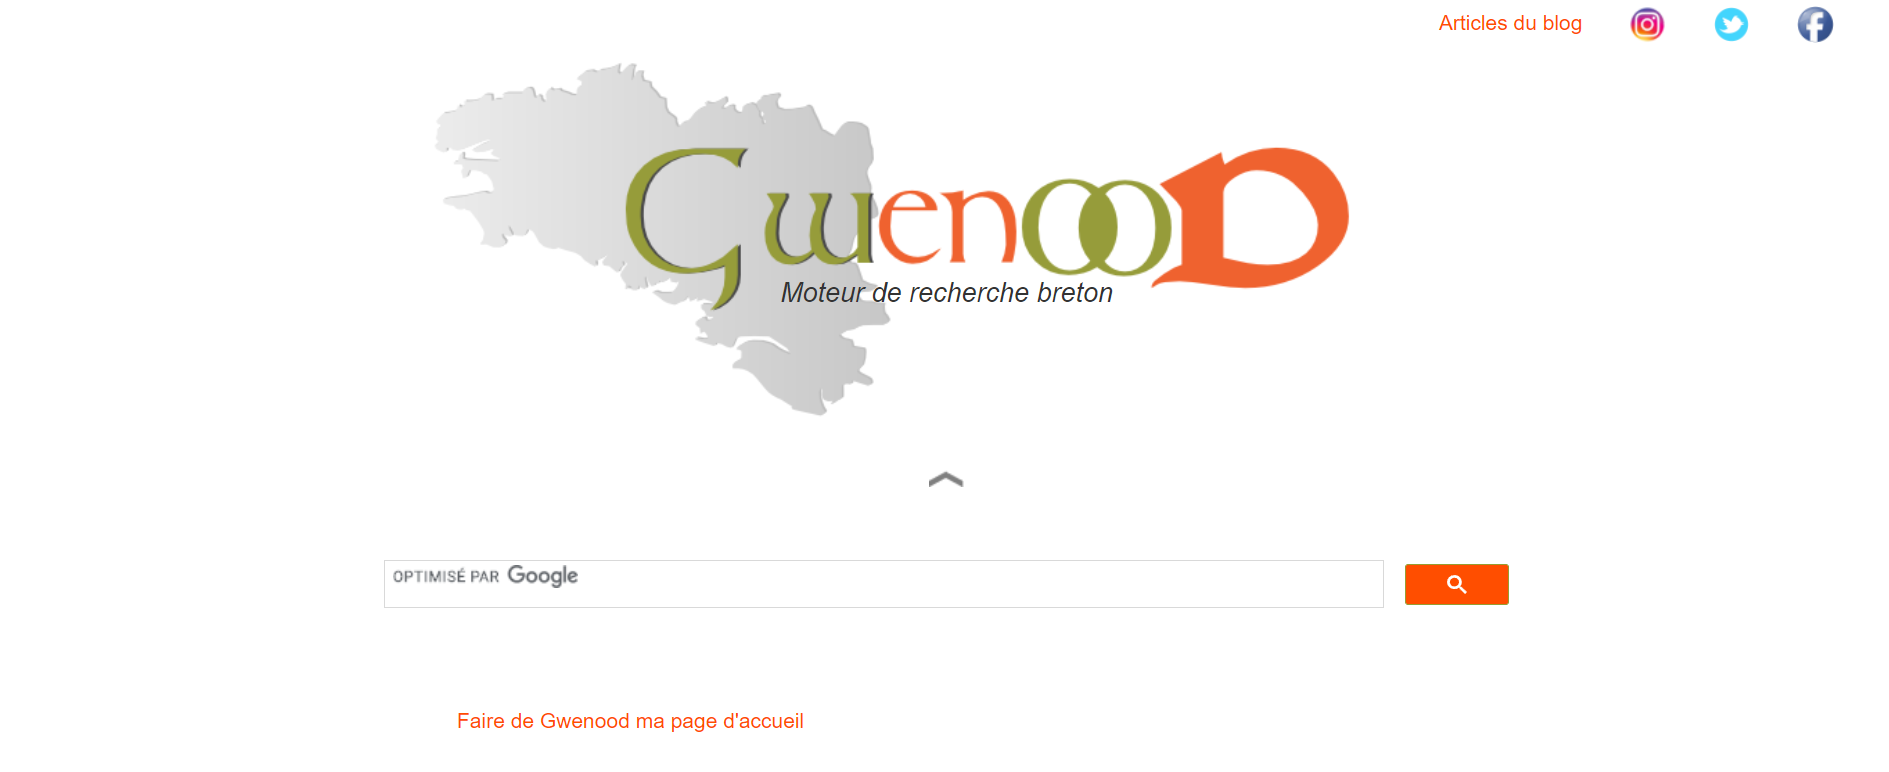 Buscadores aparte de Google: Gwenood